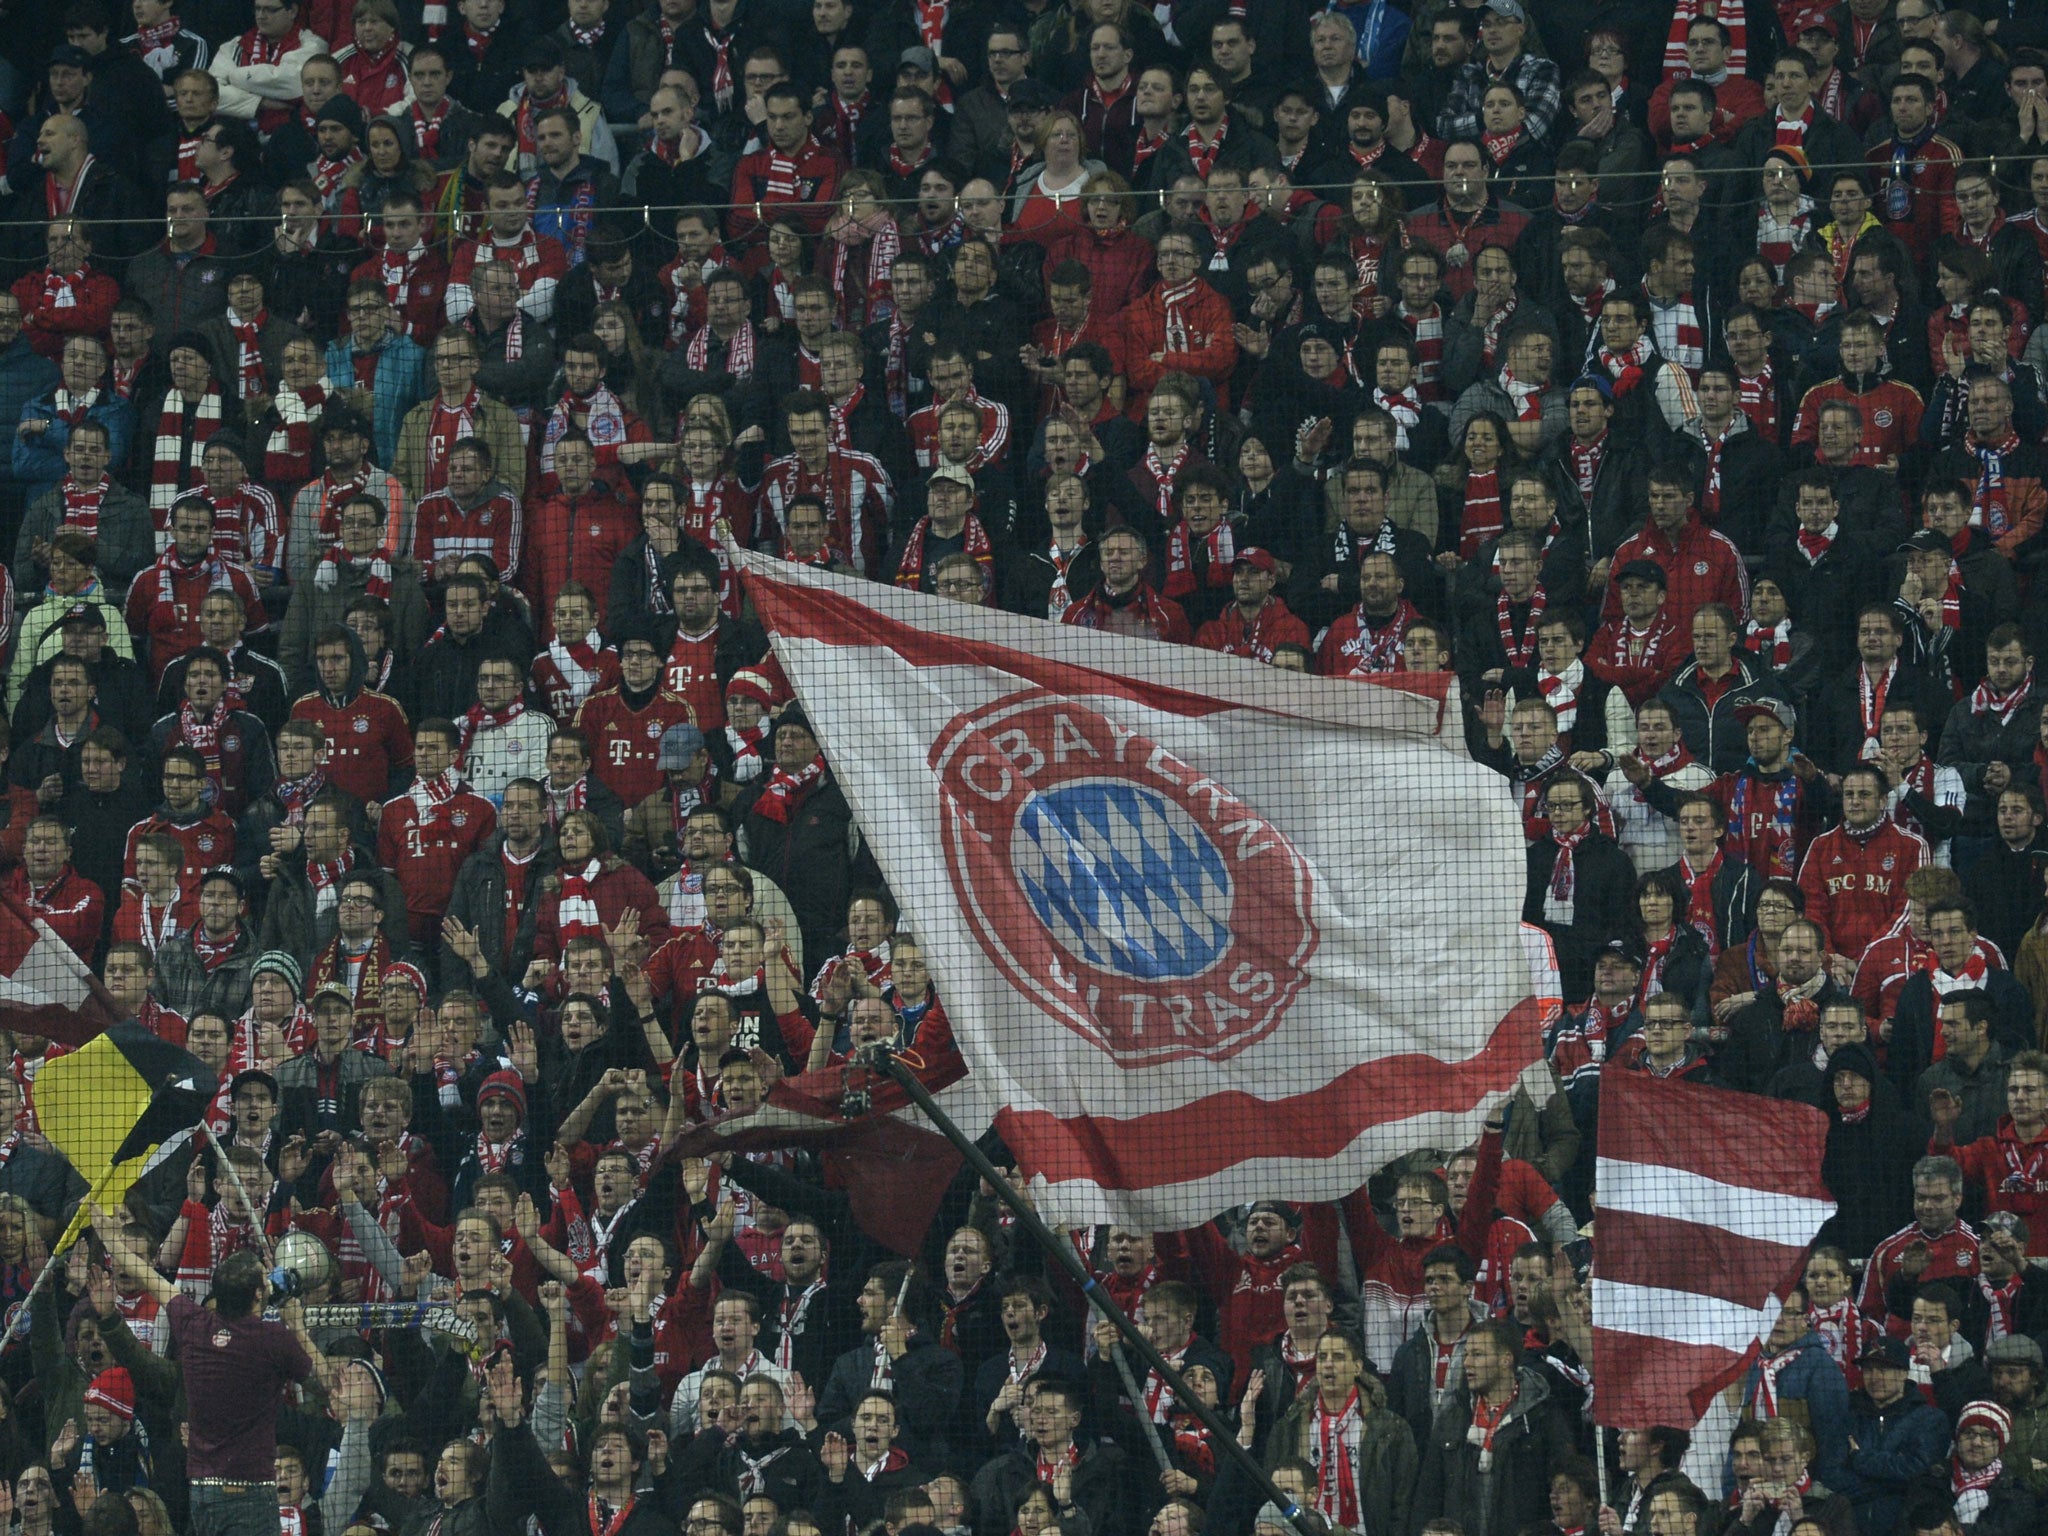 Bayern Munich's fans